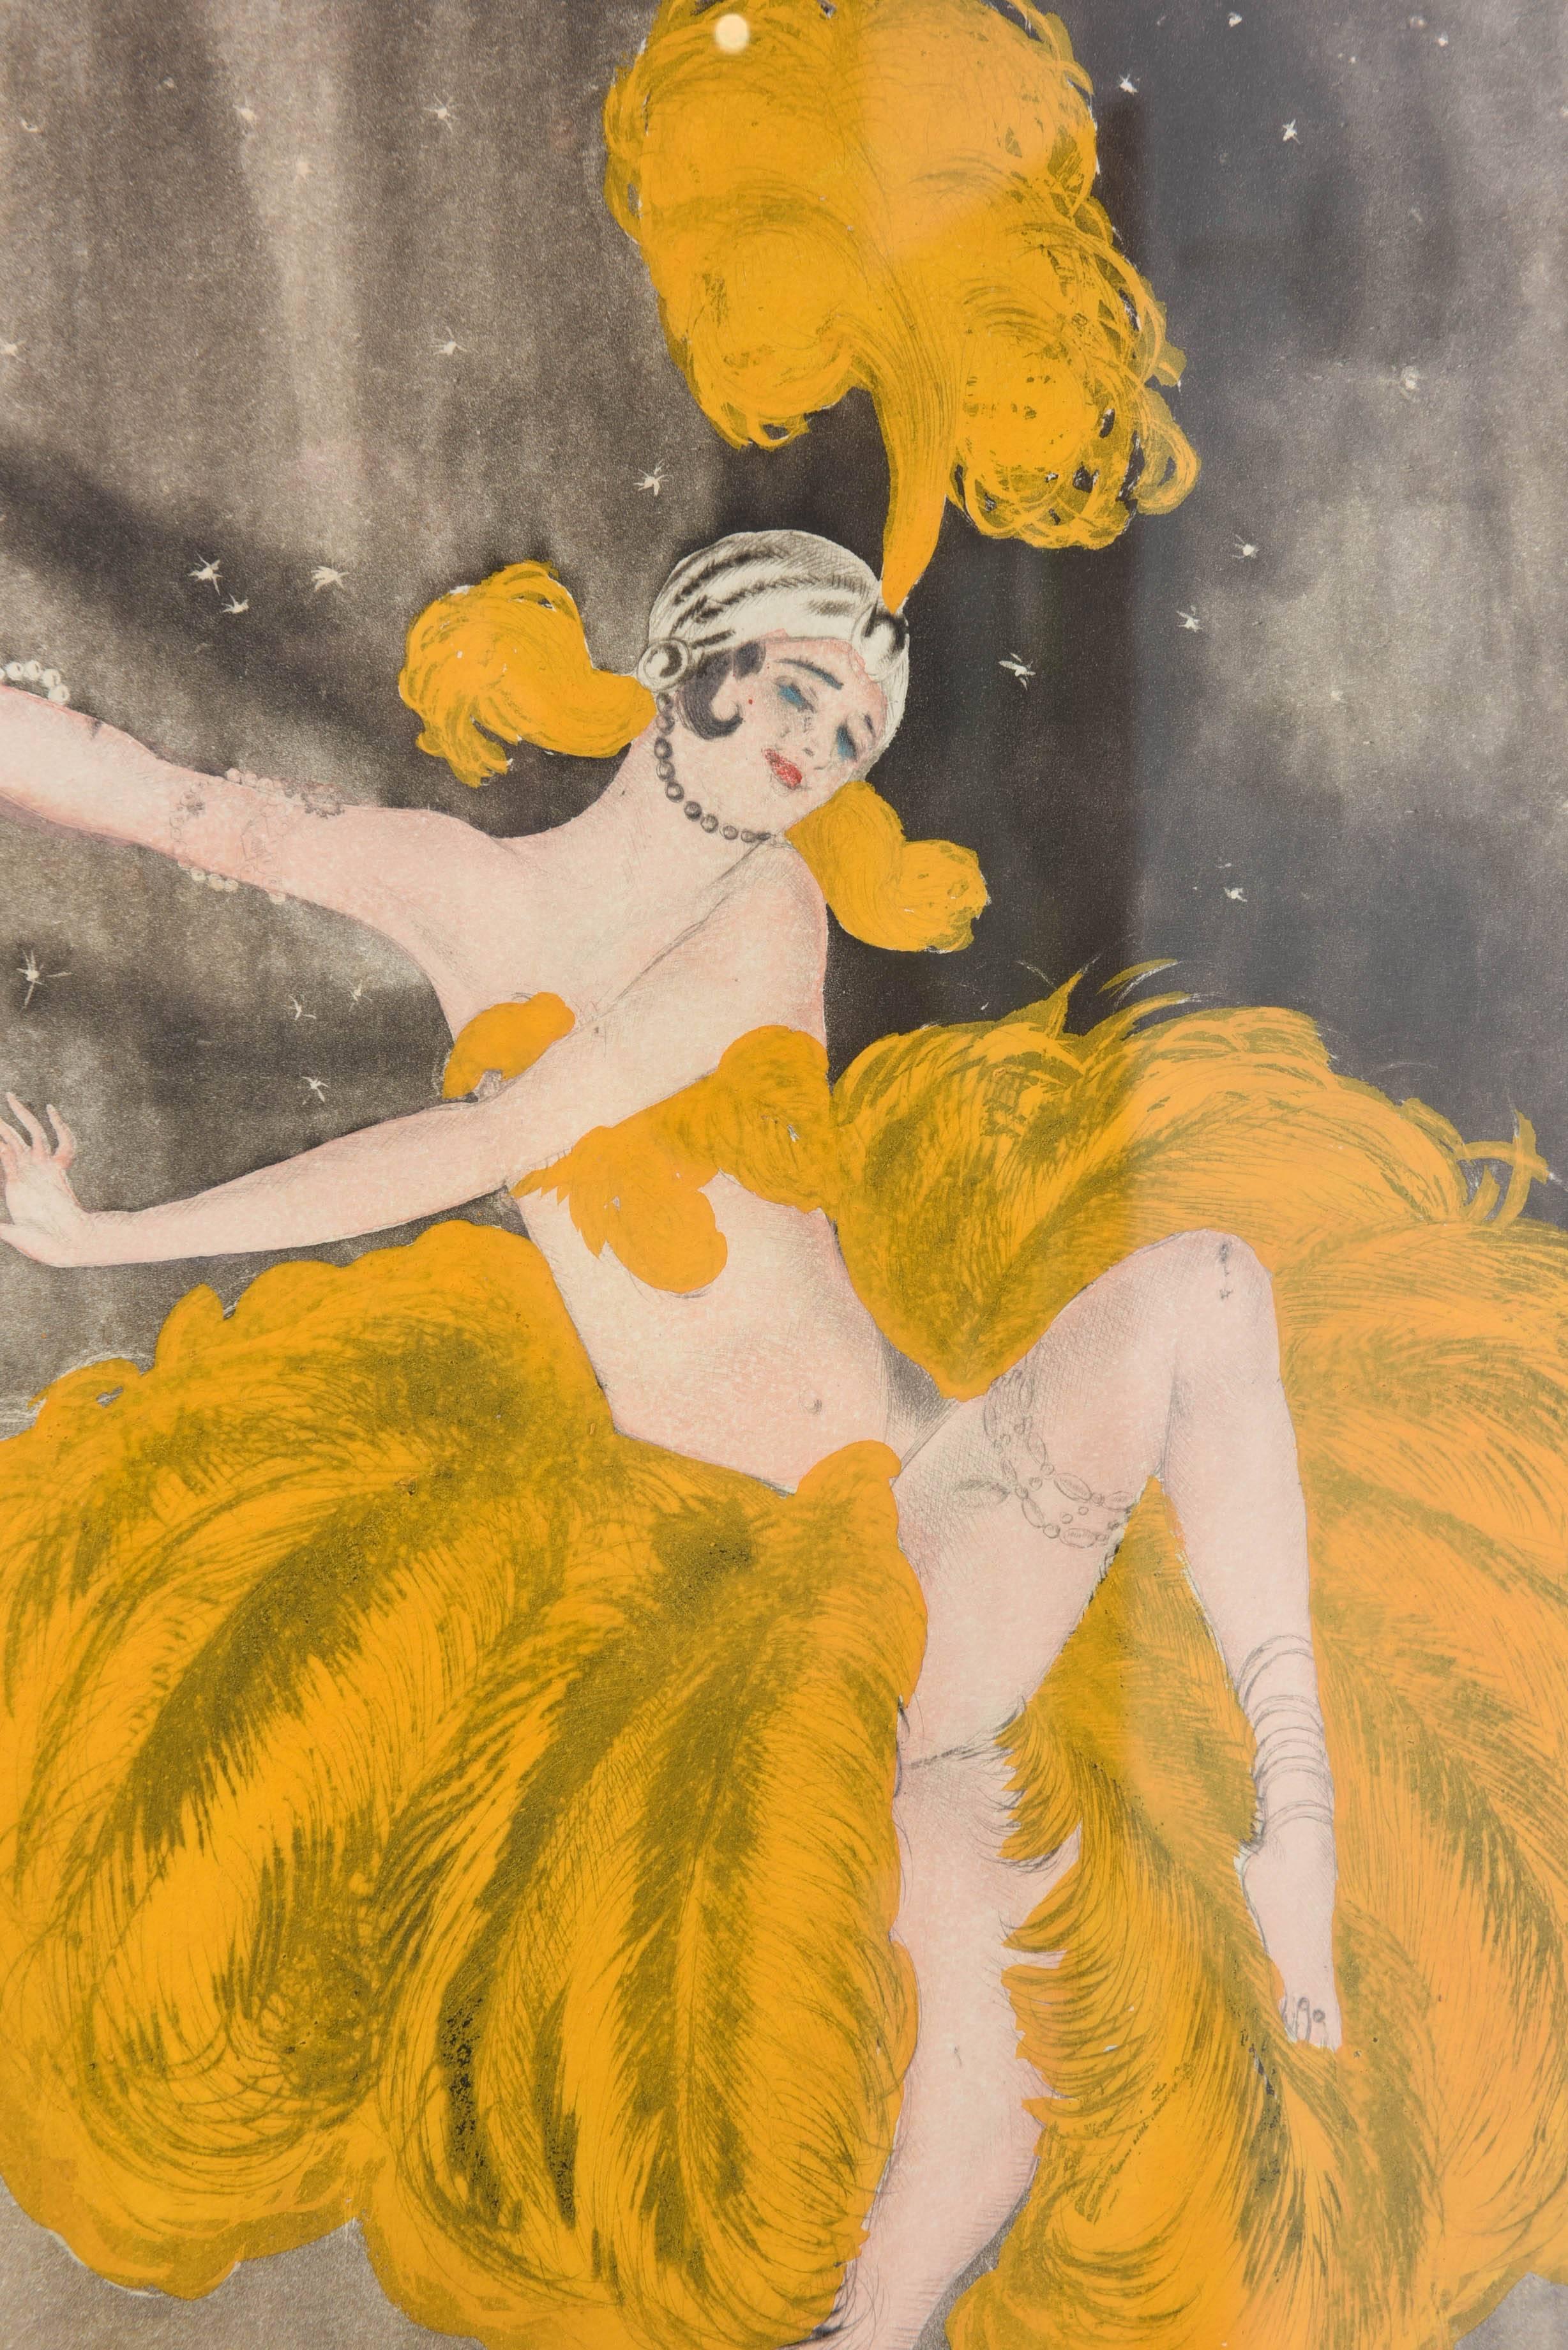 American Watercolor of a Art Deco Burlesque Dancer